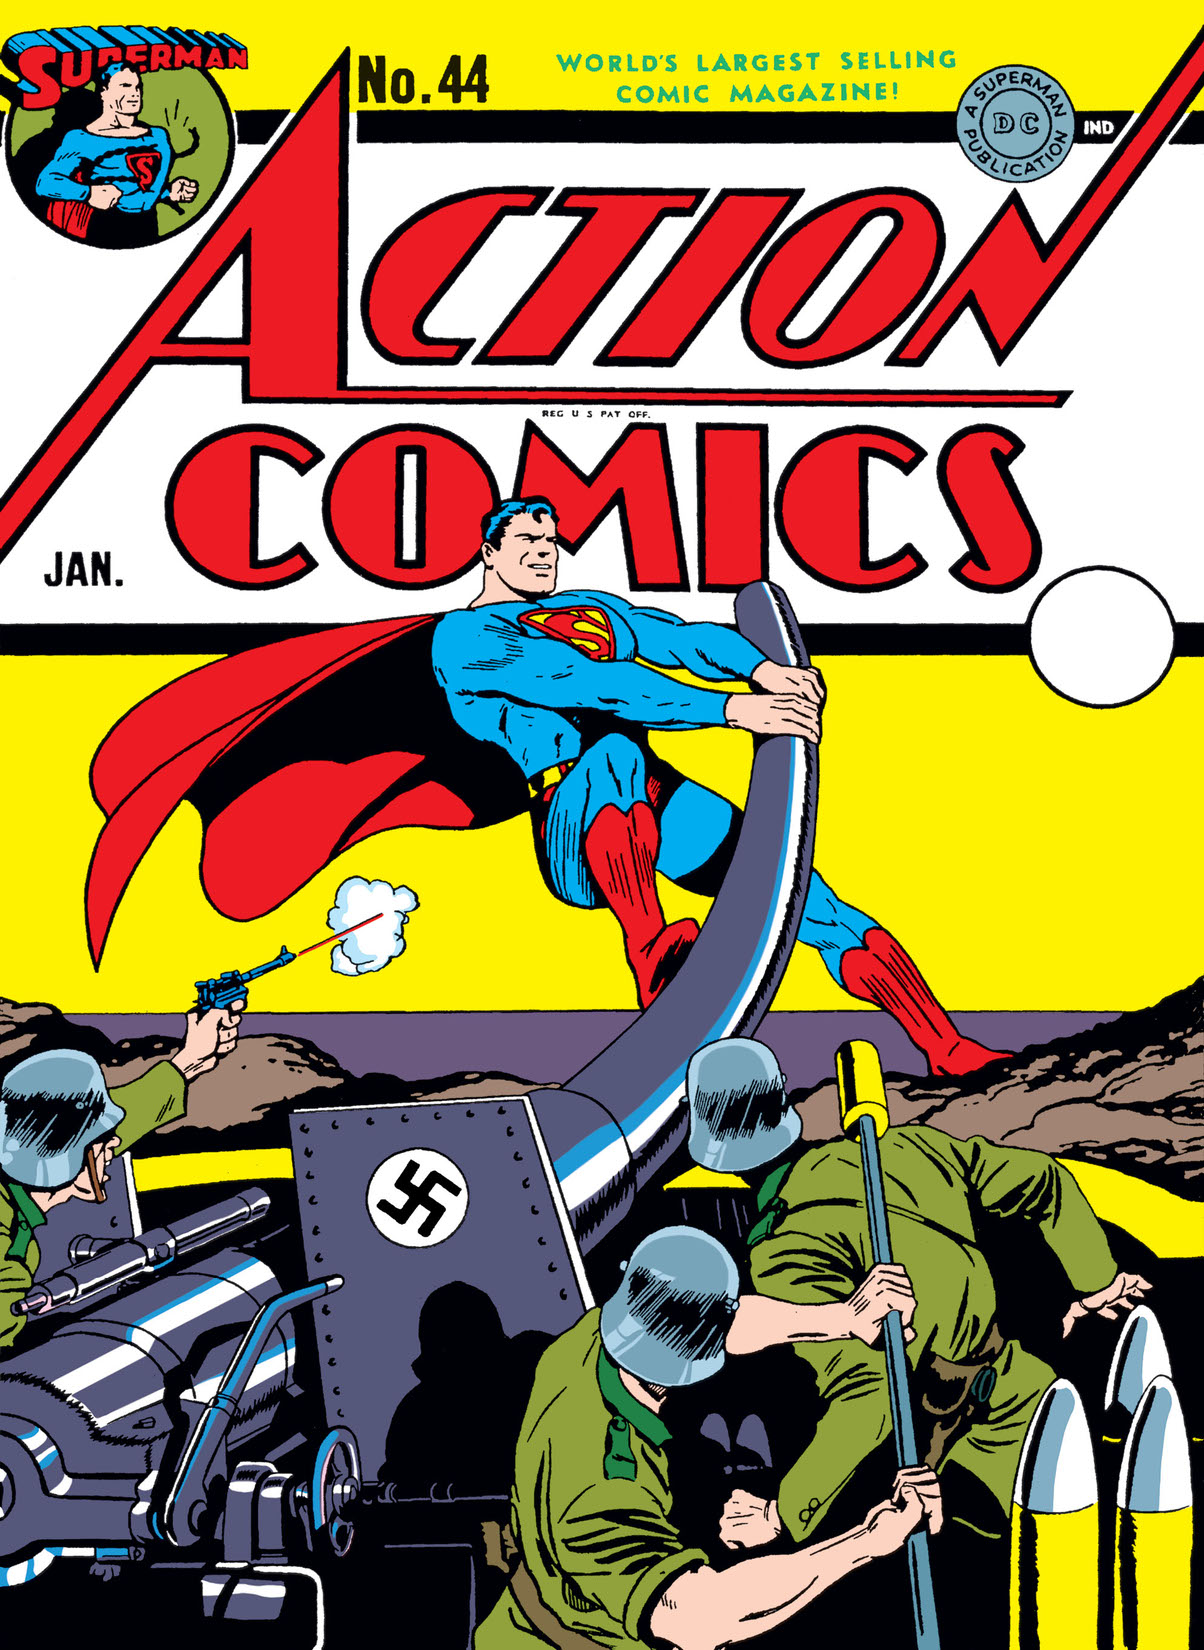 Action Comics (1938-) #44 preview images